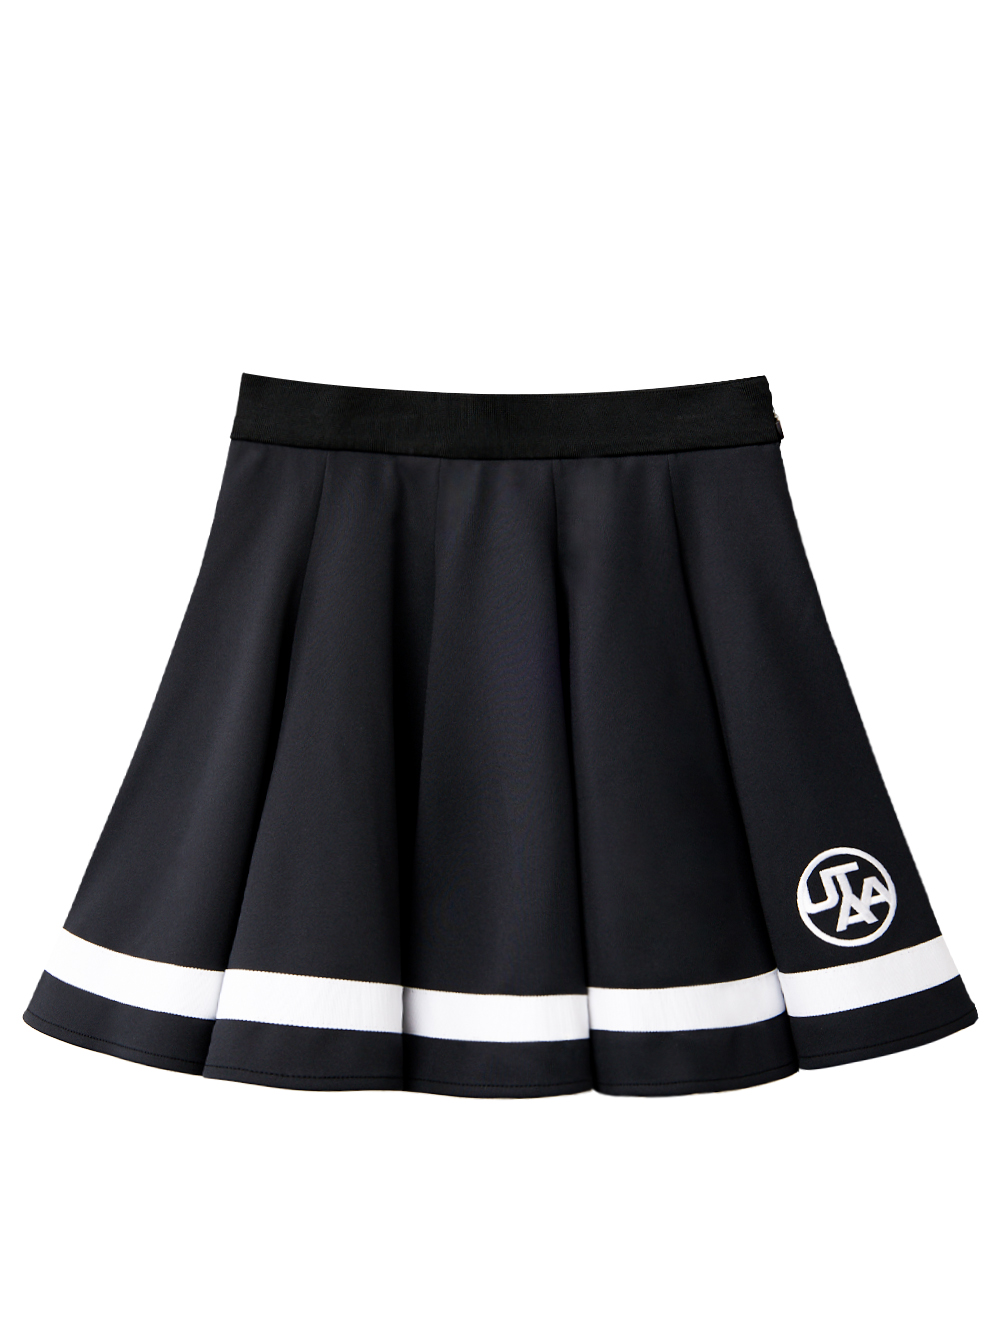 UTAA Taping Mix Flare Skirt : Black (UD2SKF232BK)